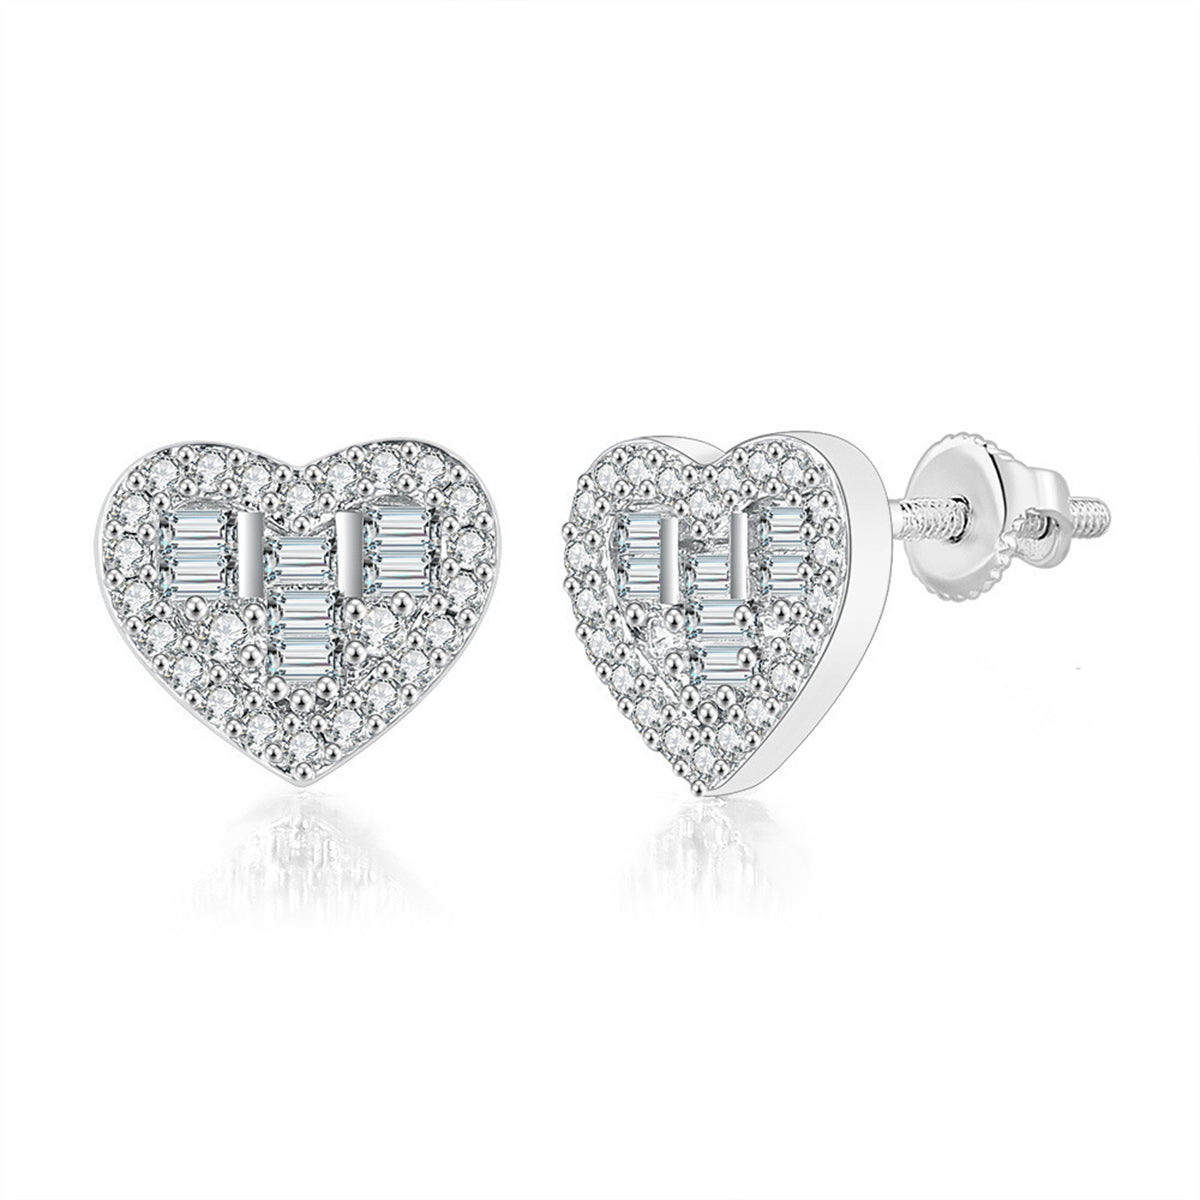 Crystal & Cubic Zirconia Silver-Plated Heart Stud Earrings